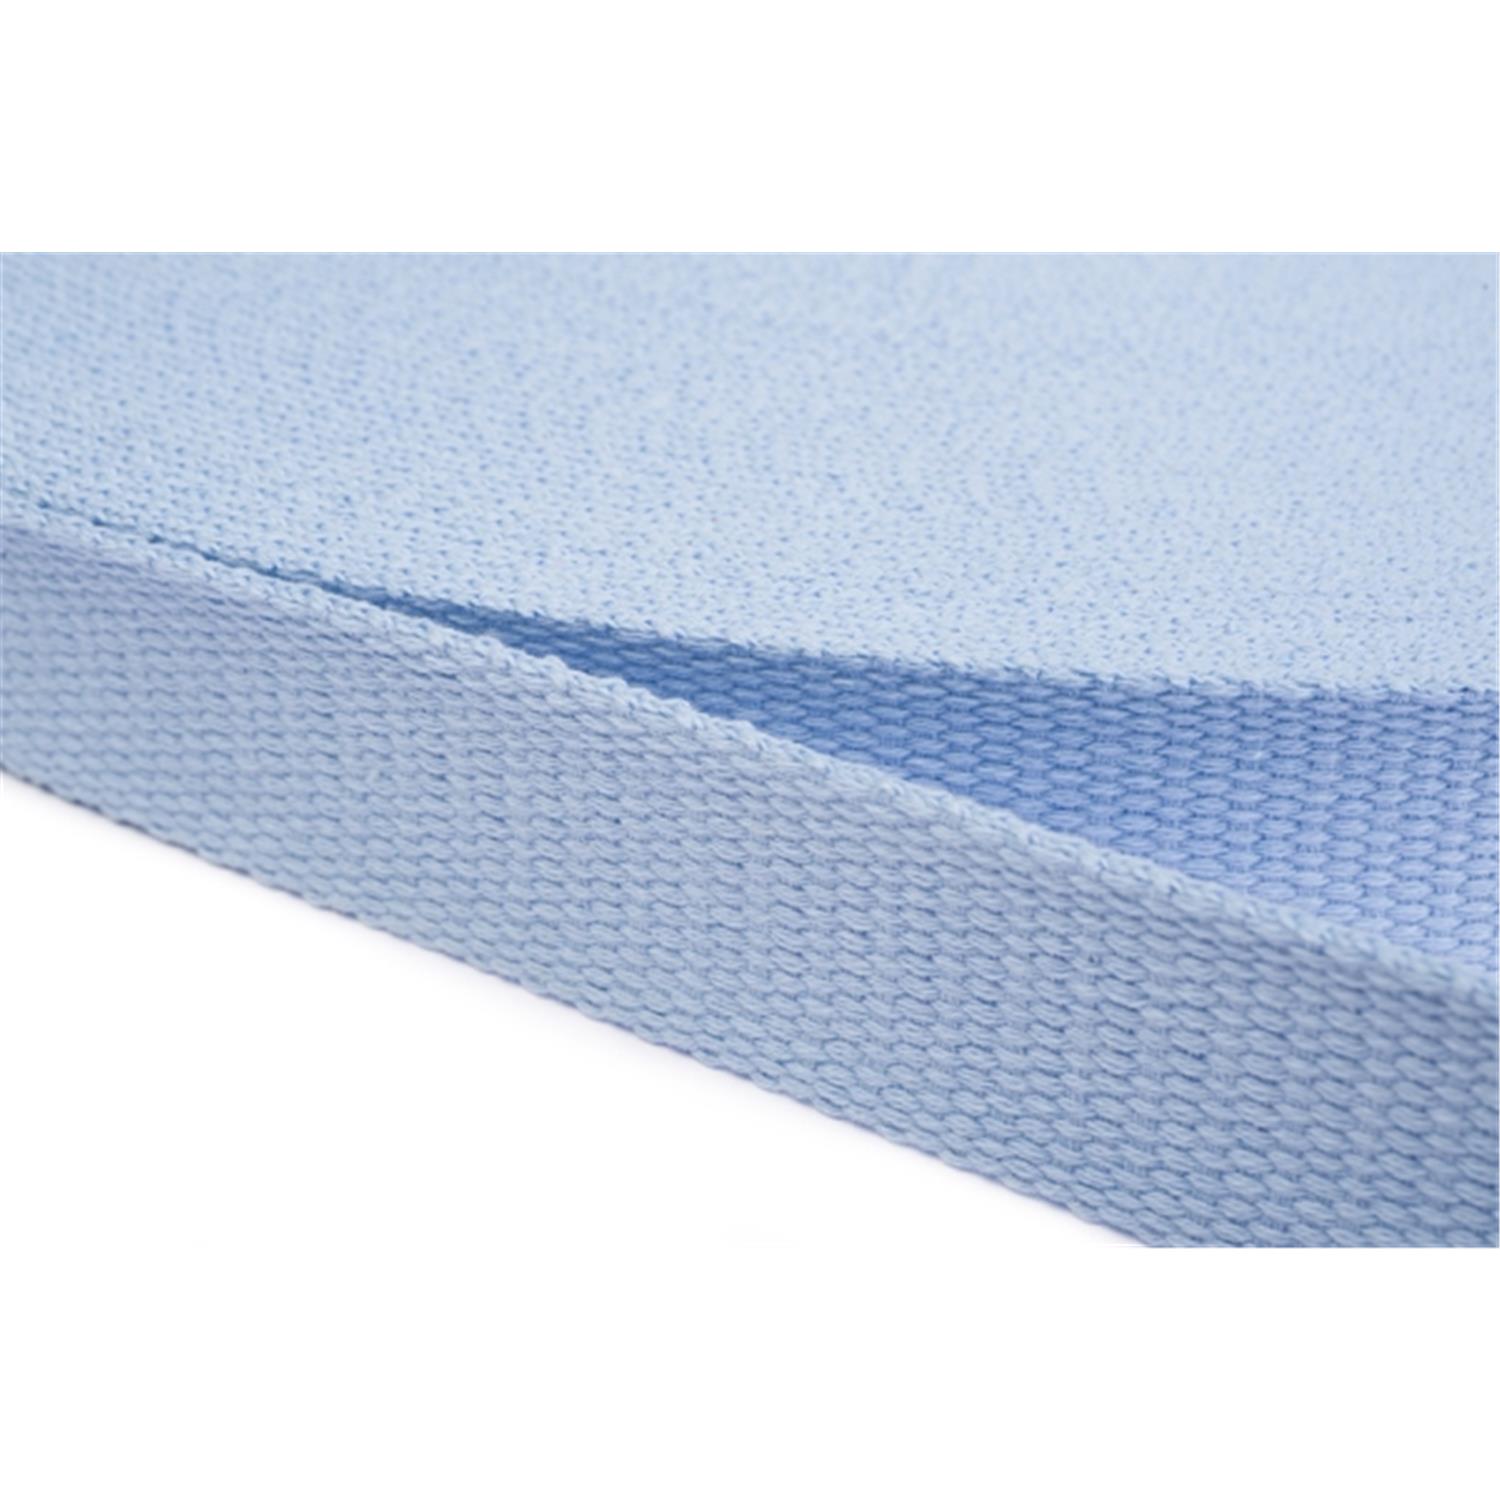 Gurtband aus Baumwolle 25mm in 20 Farben 11 - hellblau 12 Meter